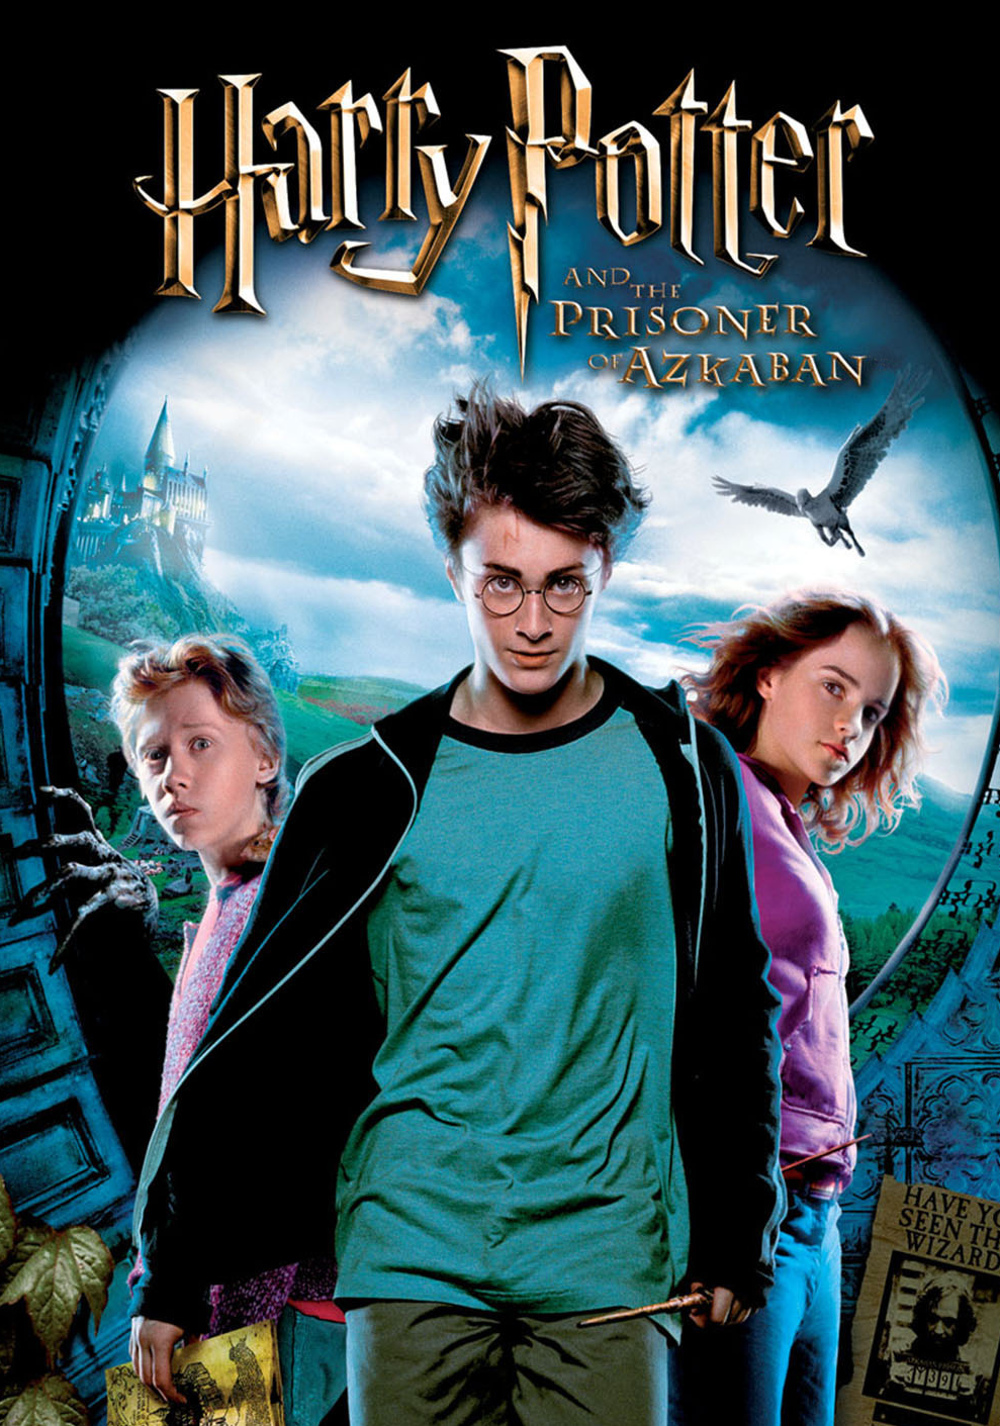 Harry Potter And The Prisoner Of Azkaban HD wallpapers, Desktop wallpaper - most viewed